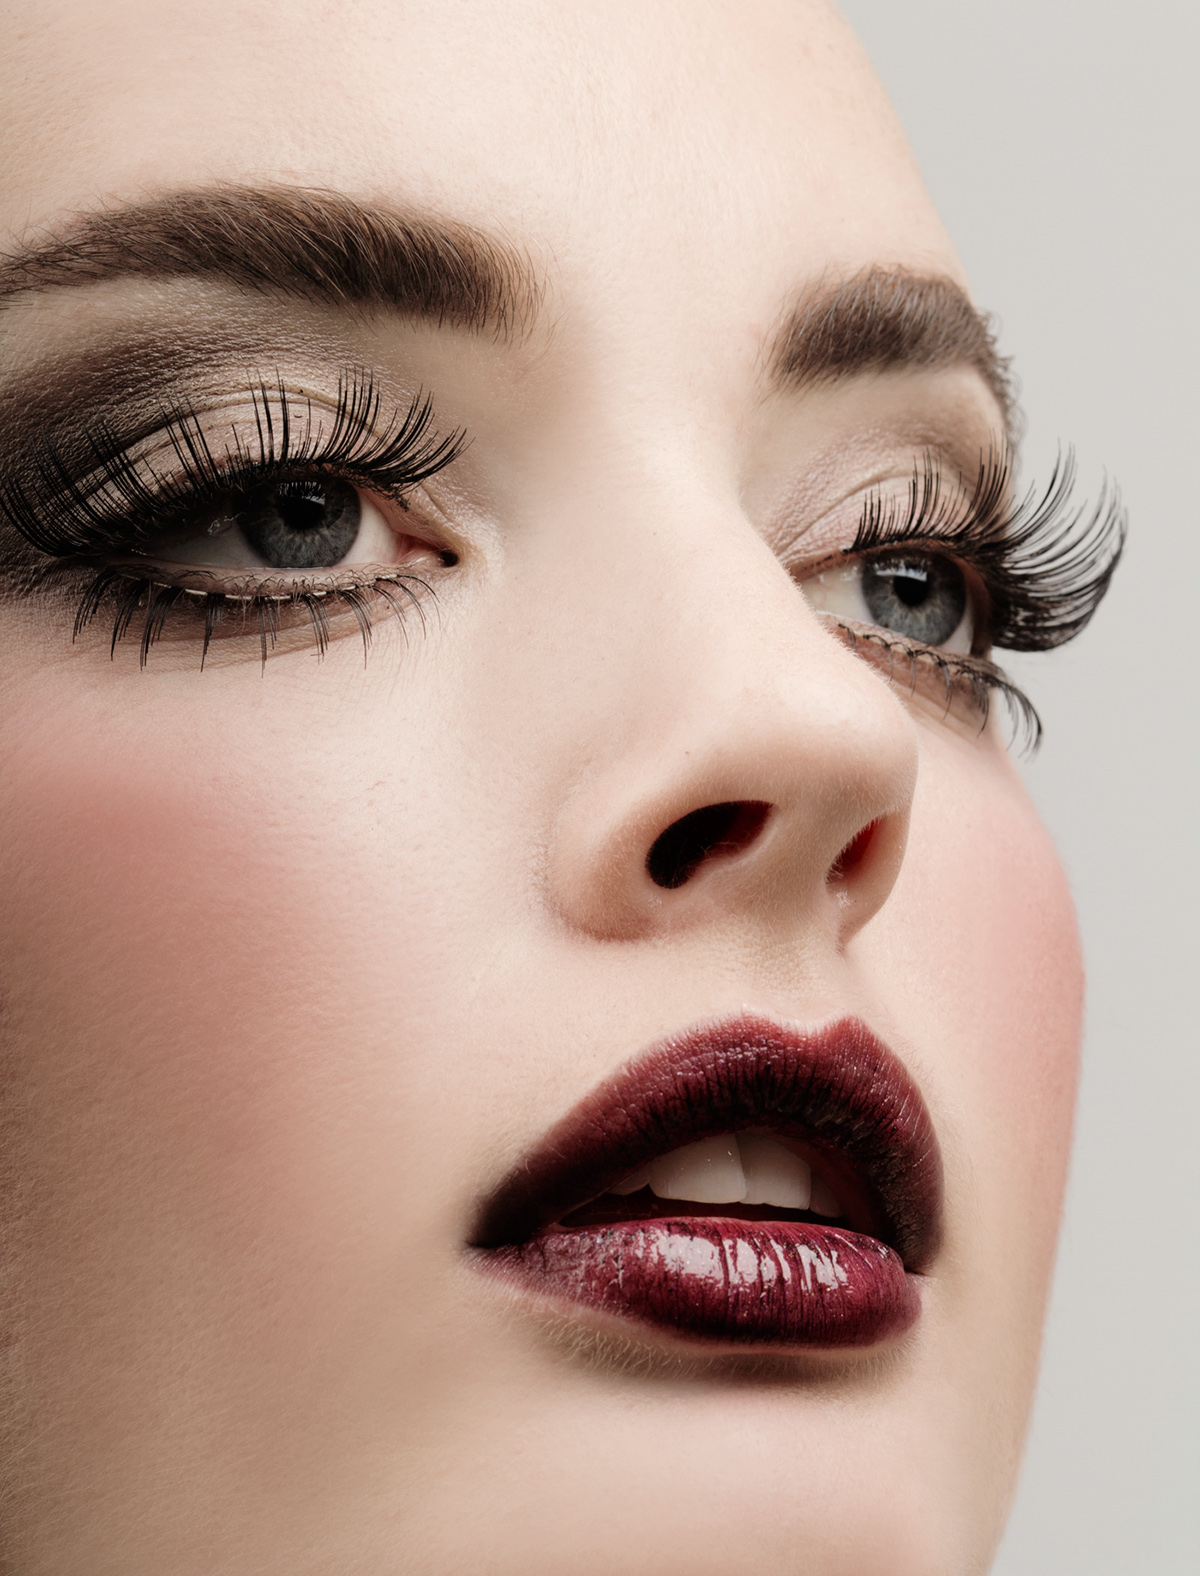 beauty eye lips carsten Witte editorial magazine eyeliner makeuparts eyes lasher